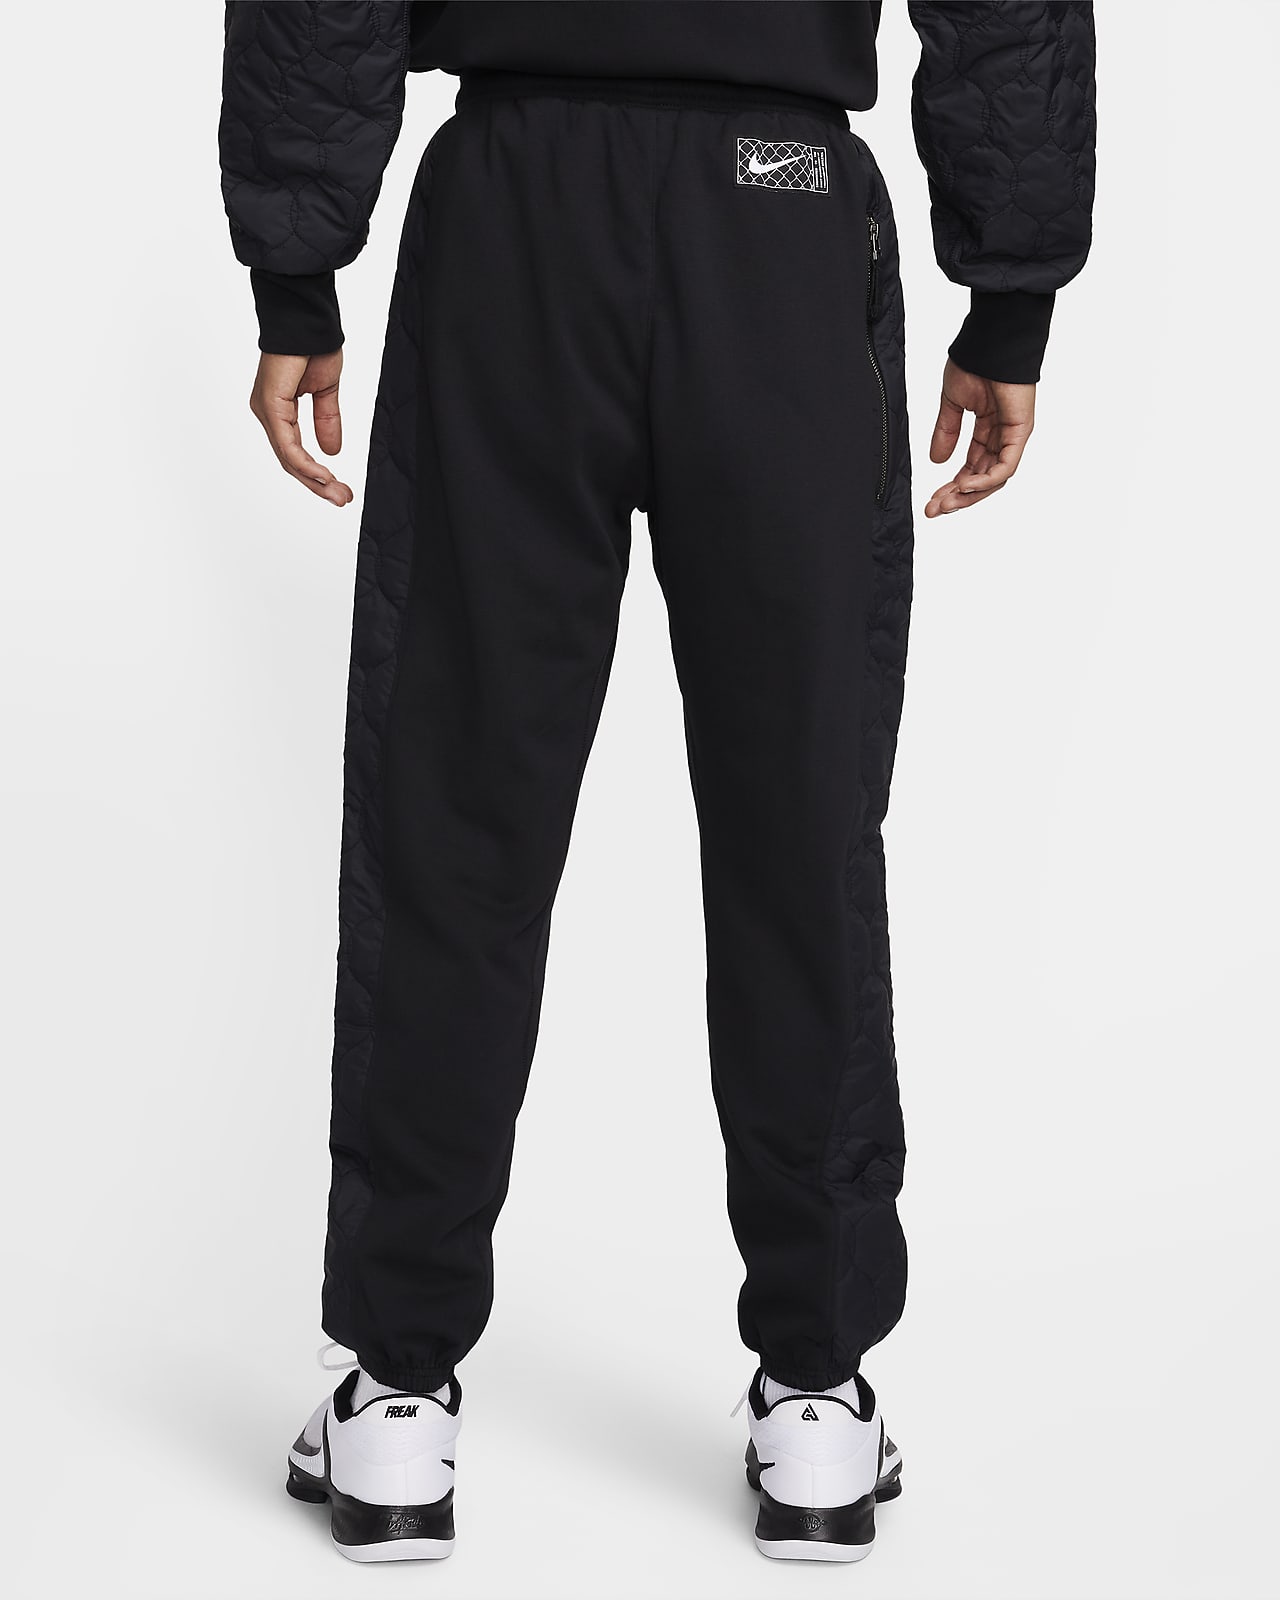 Nike Dri-FIT Standard Issue Men's Cuffed Basketball Pants. Nike